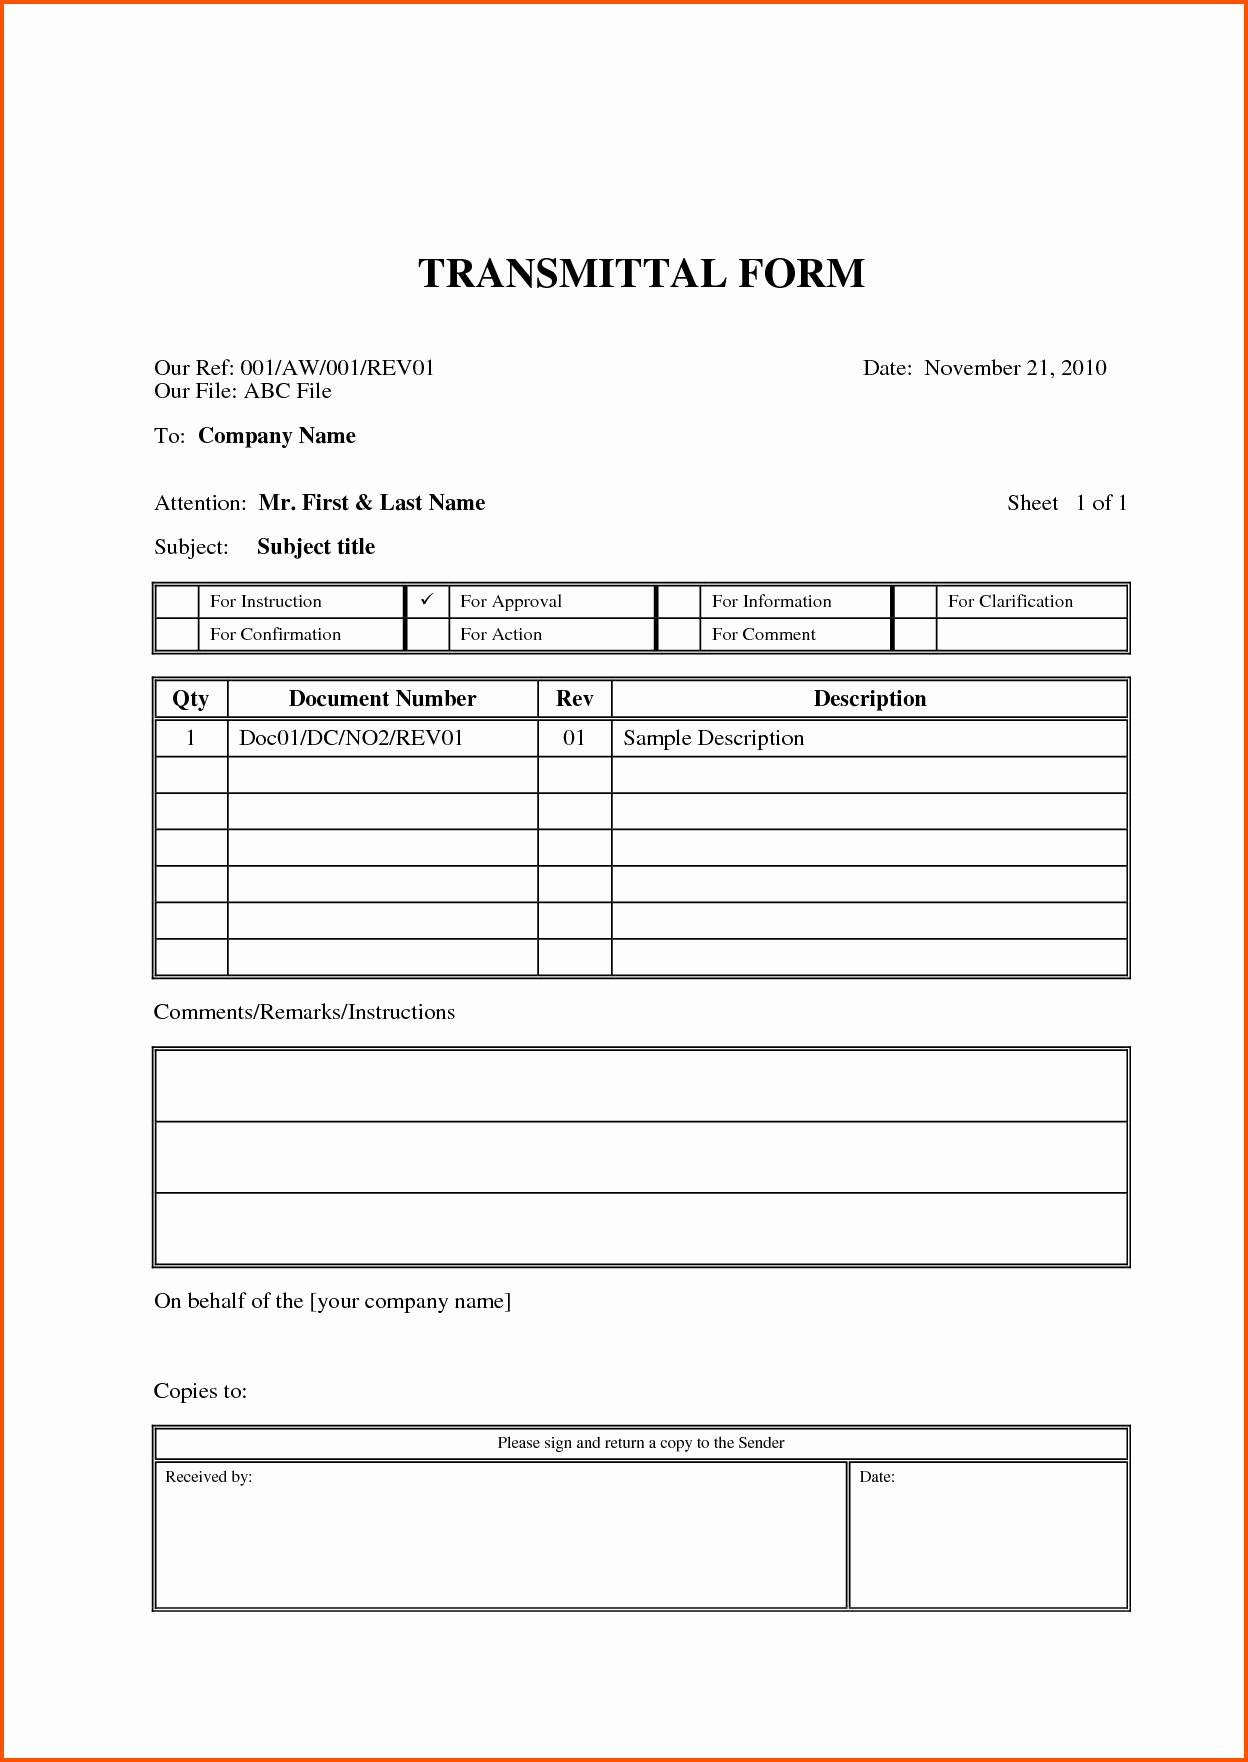 Transmittal Cover Letter Template - Transmittal form Sample Template New Construction Transmittal Letter